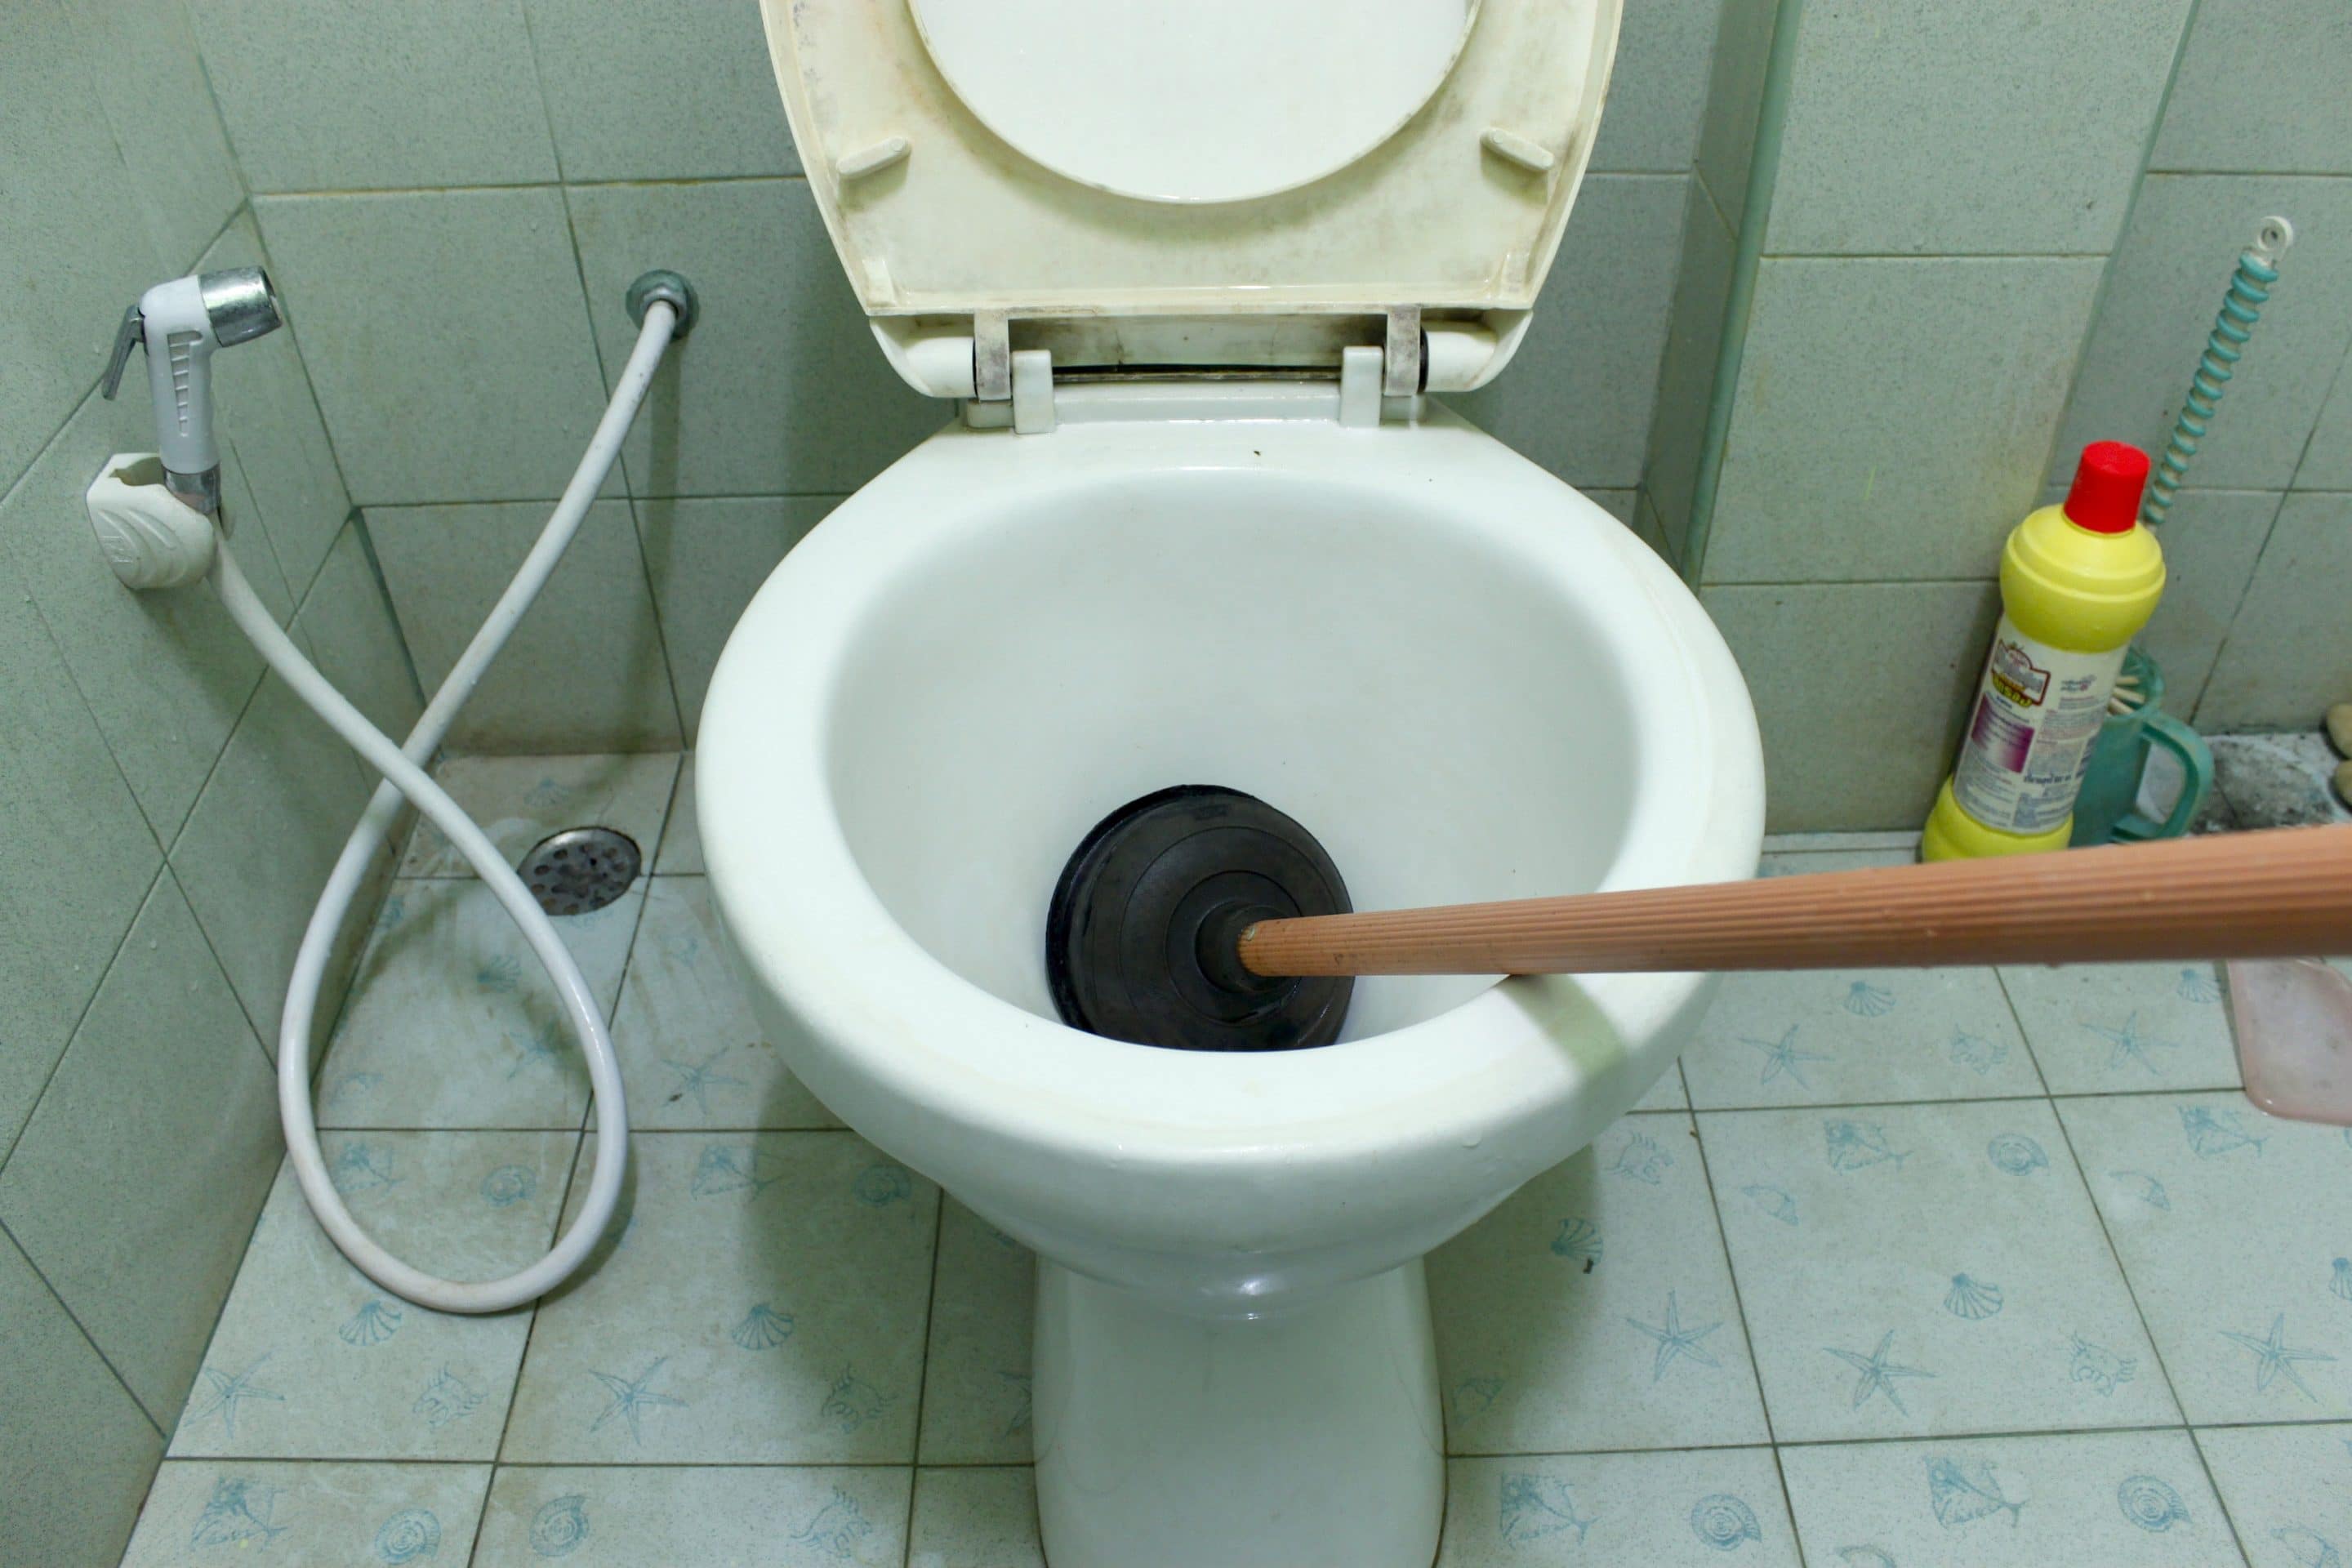 https://balkandraincleaning.com/wp-content/uploads/clogged-toilet.jpg